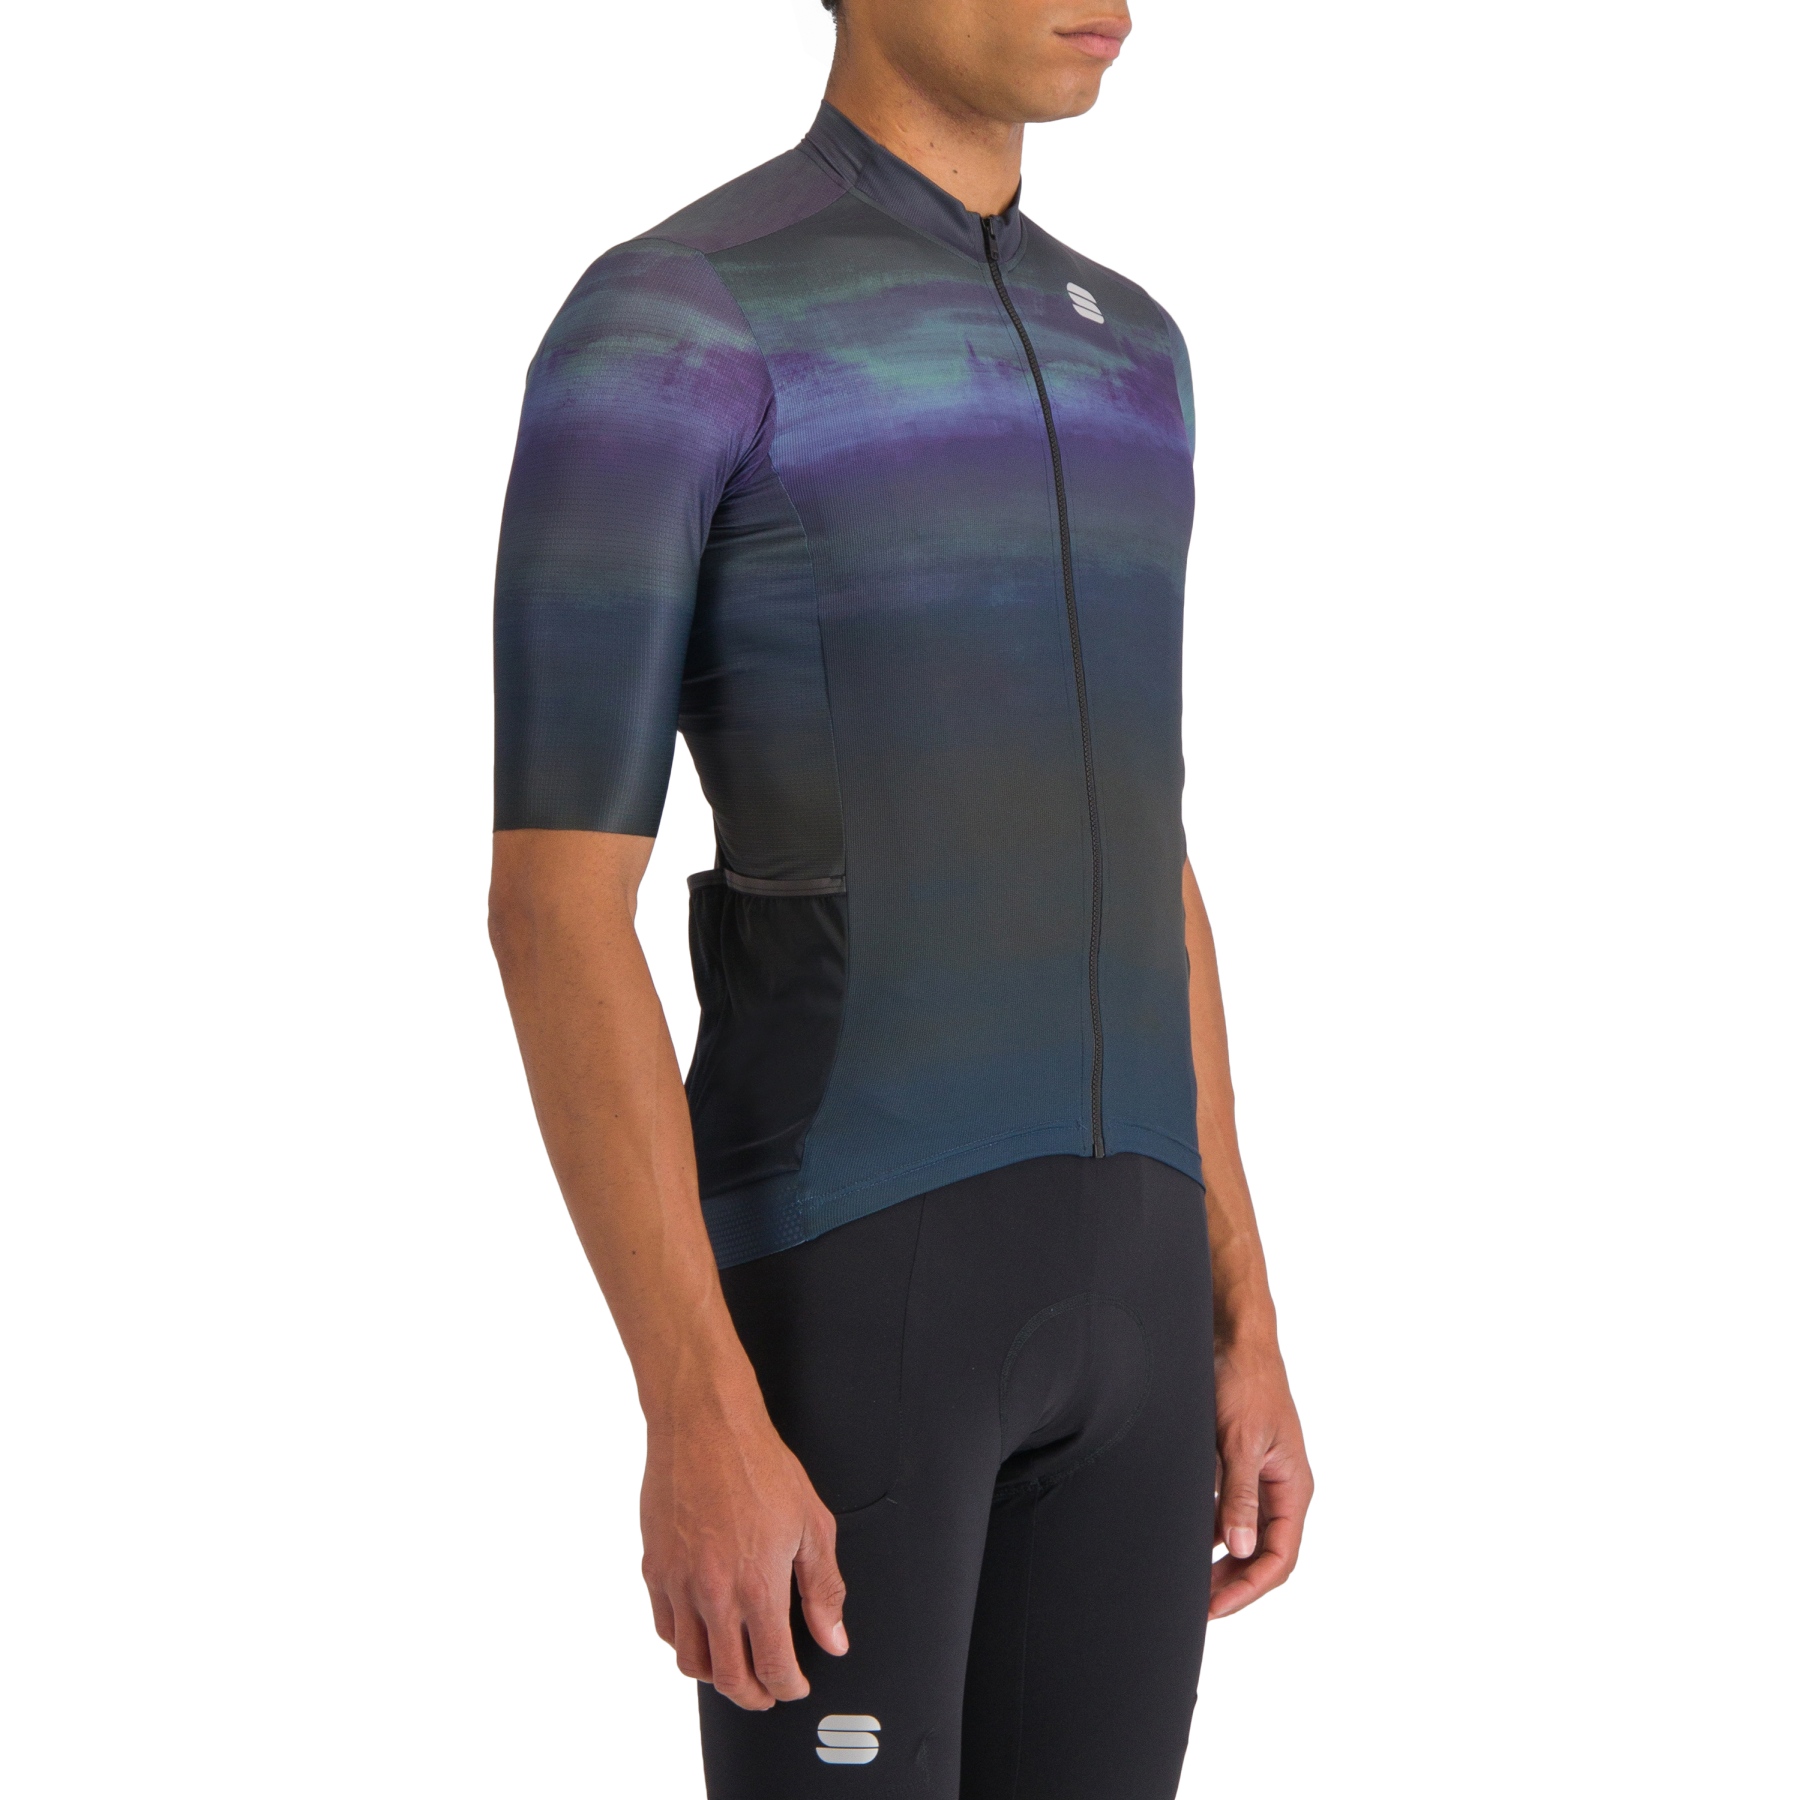 Productfoto van Sportful Flow Supergiara Shirt Heren - 002 Zwart